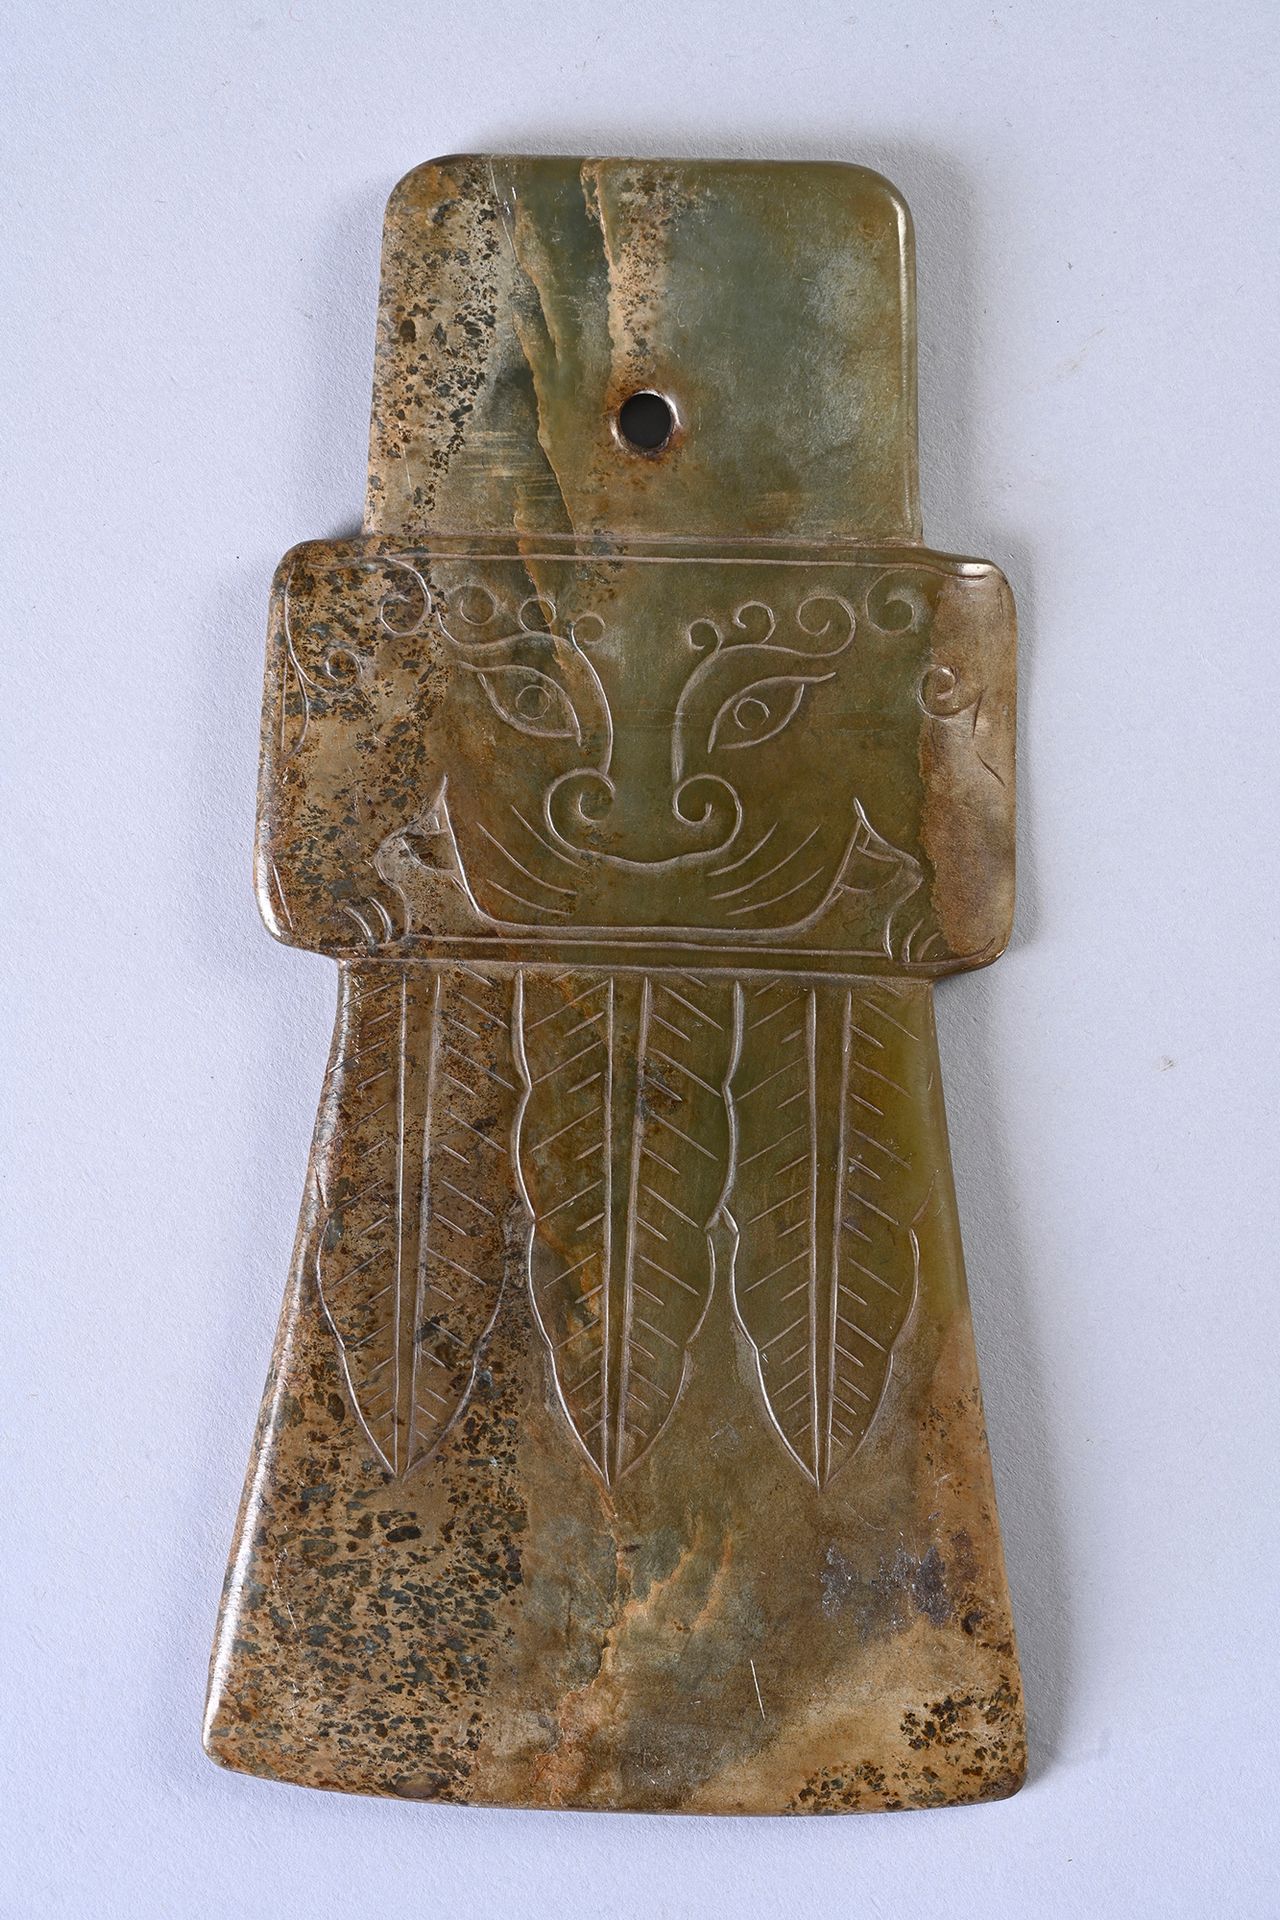 CHINE, Epoque Ming 斧刃
青玉，不透明，有铁锈纹，中间部分有浅浮雕的奇美拉面具的装饰。
长：21,7厘米。